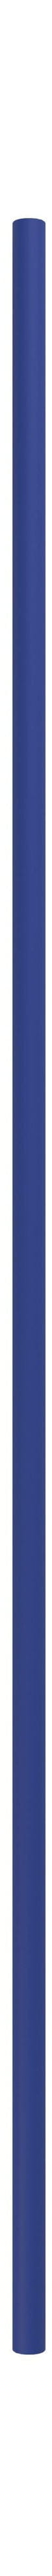 Moebe Hyllsystem/vägghyllande ben 115 cm, djupblå